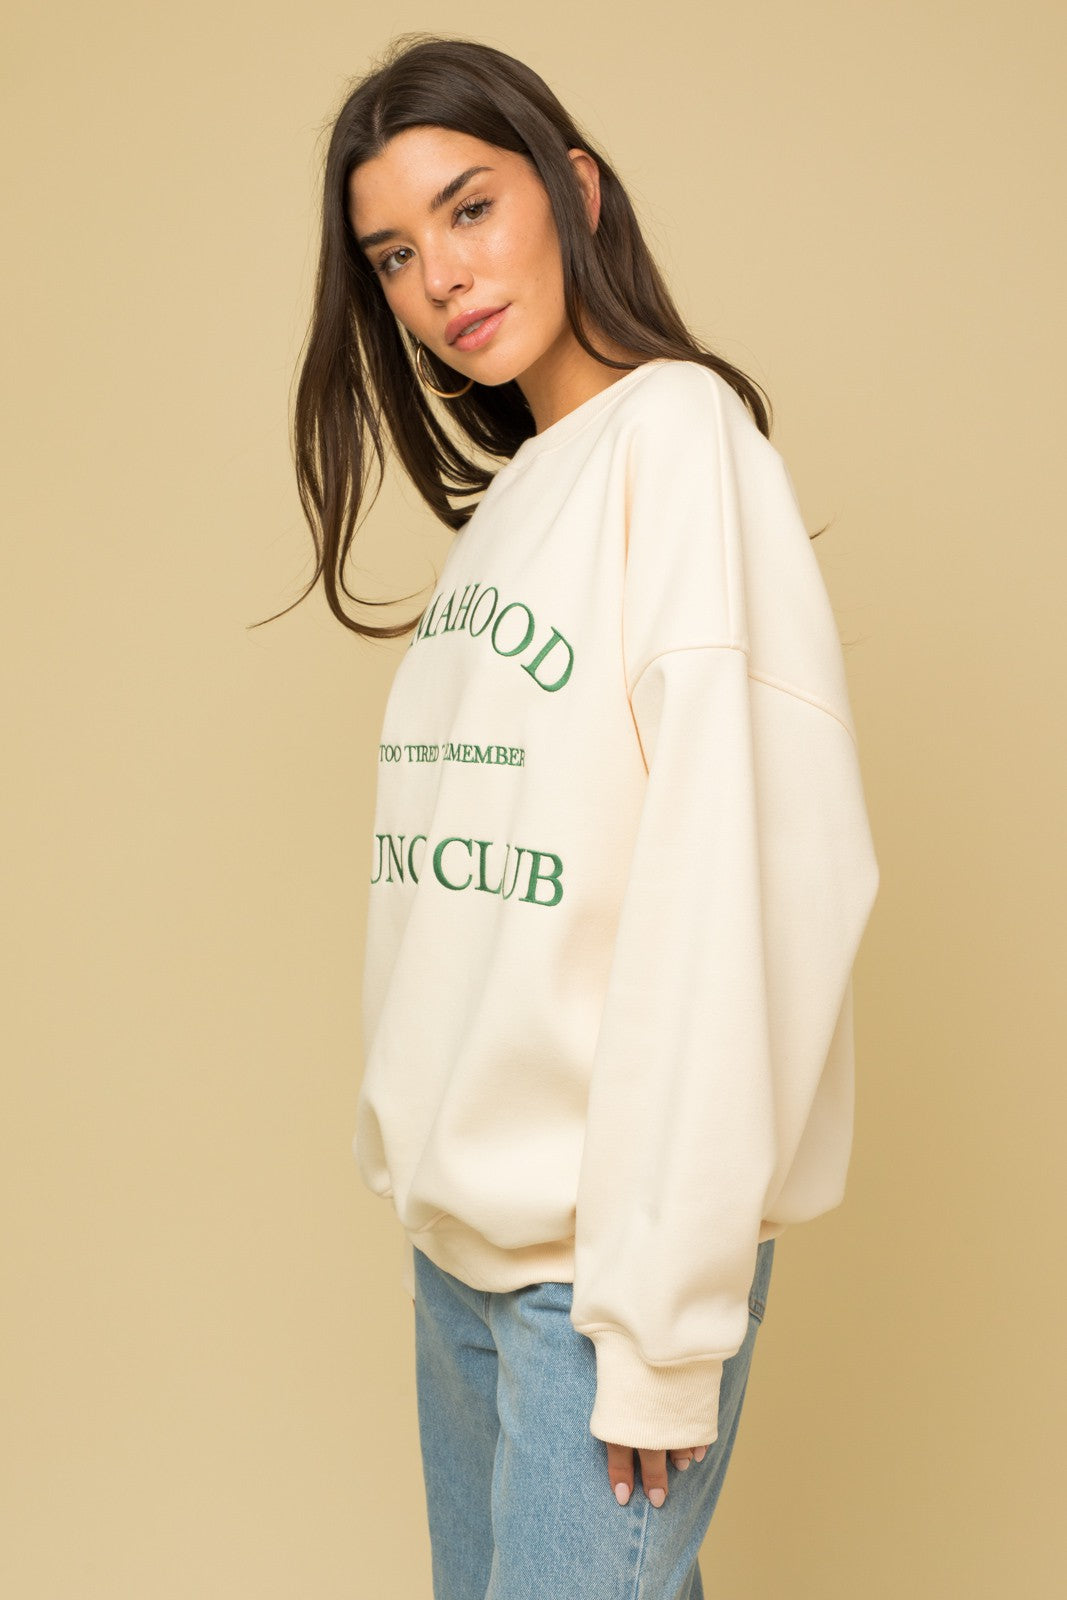 Mamahood Brunch Club Embroidered Sweatshirt